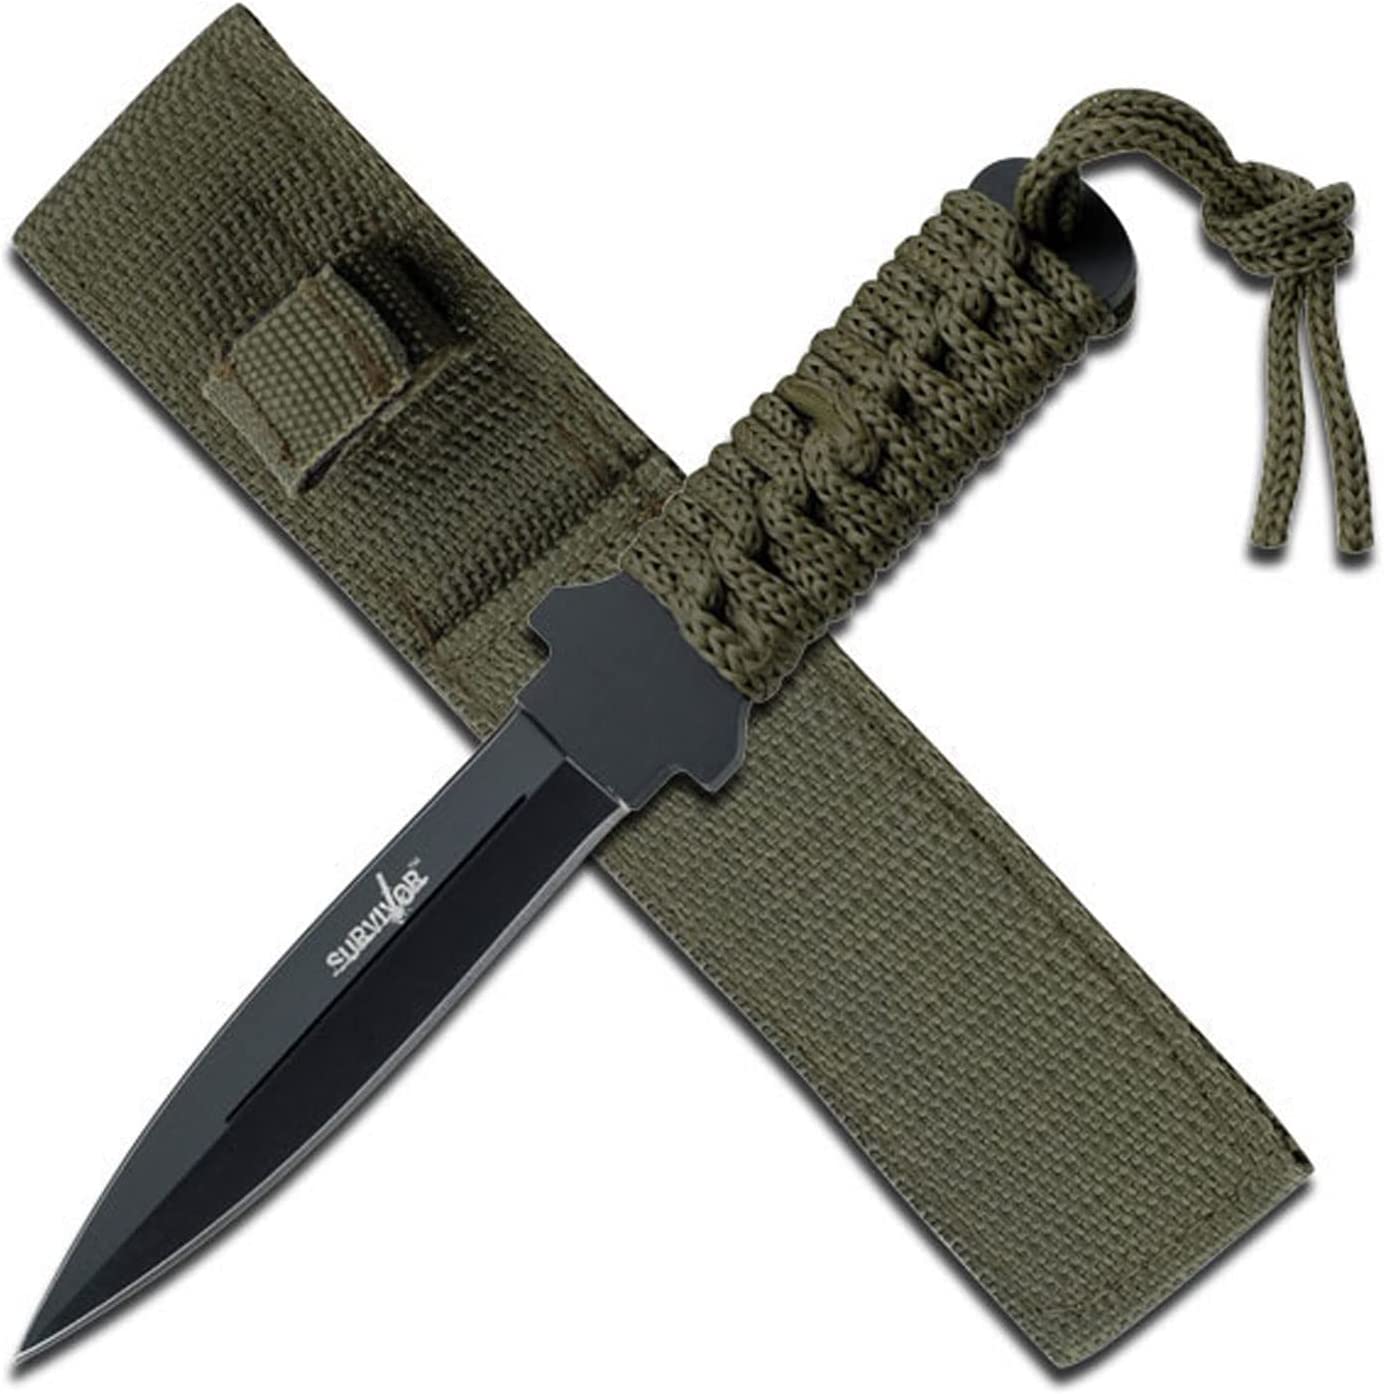 Survivor HK-7521 Outdoor Fixed Blade Knife 7-Inch $2.44